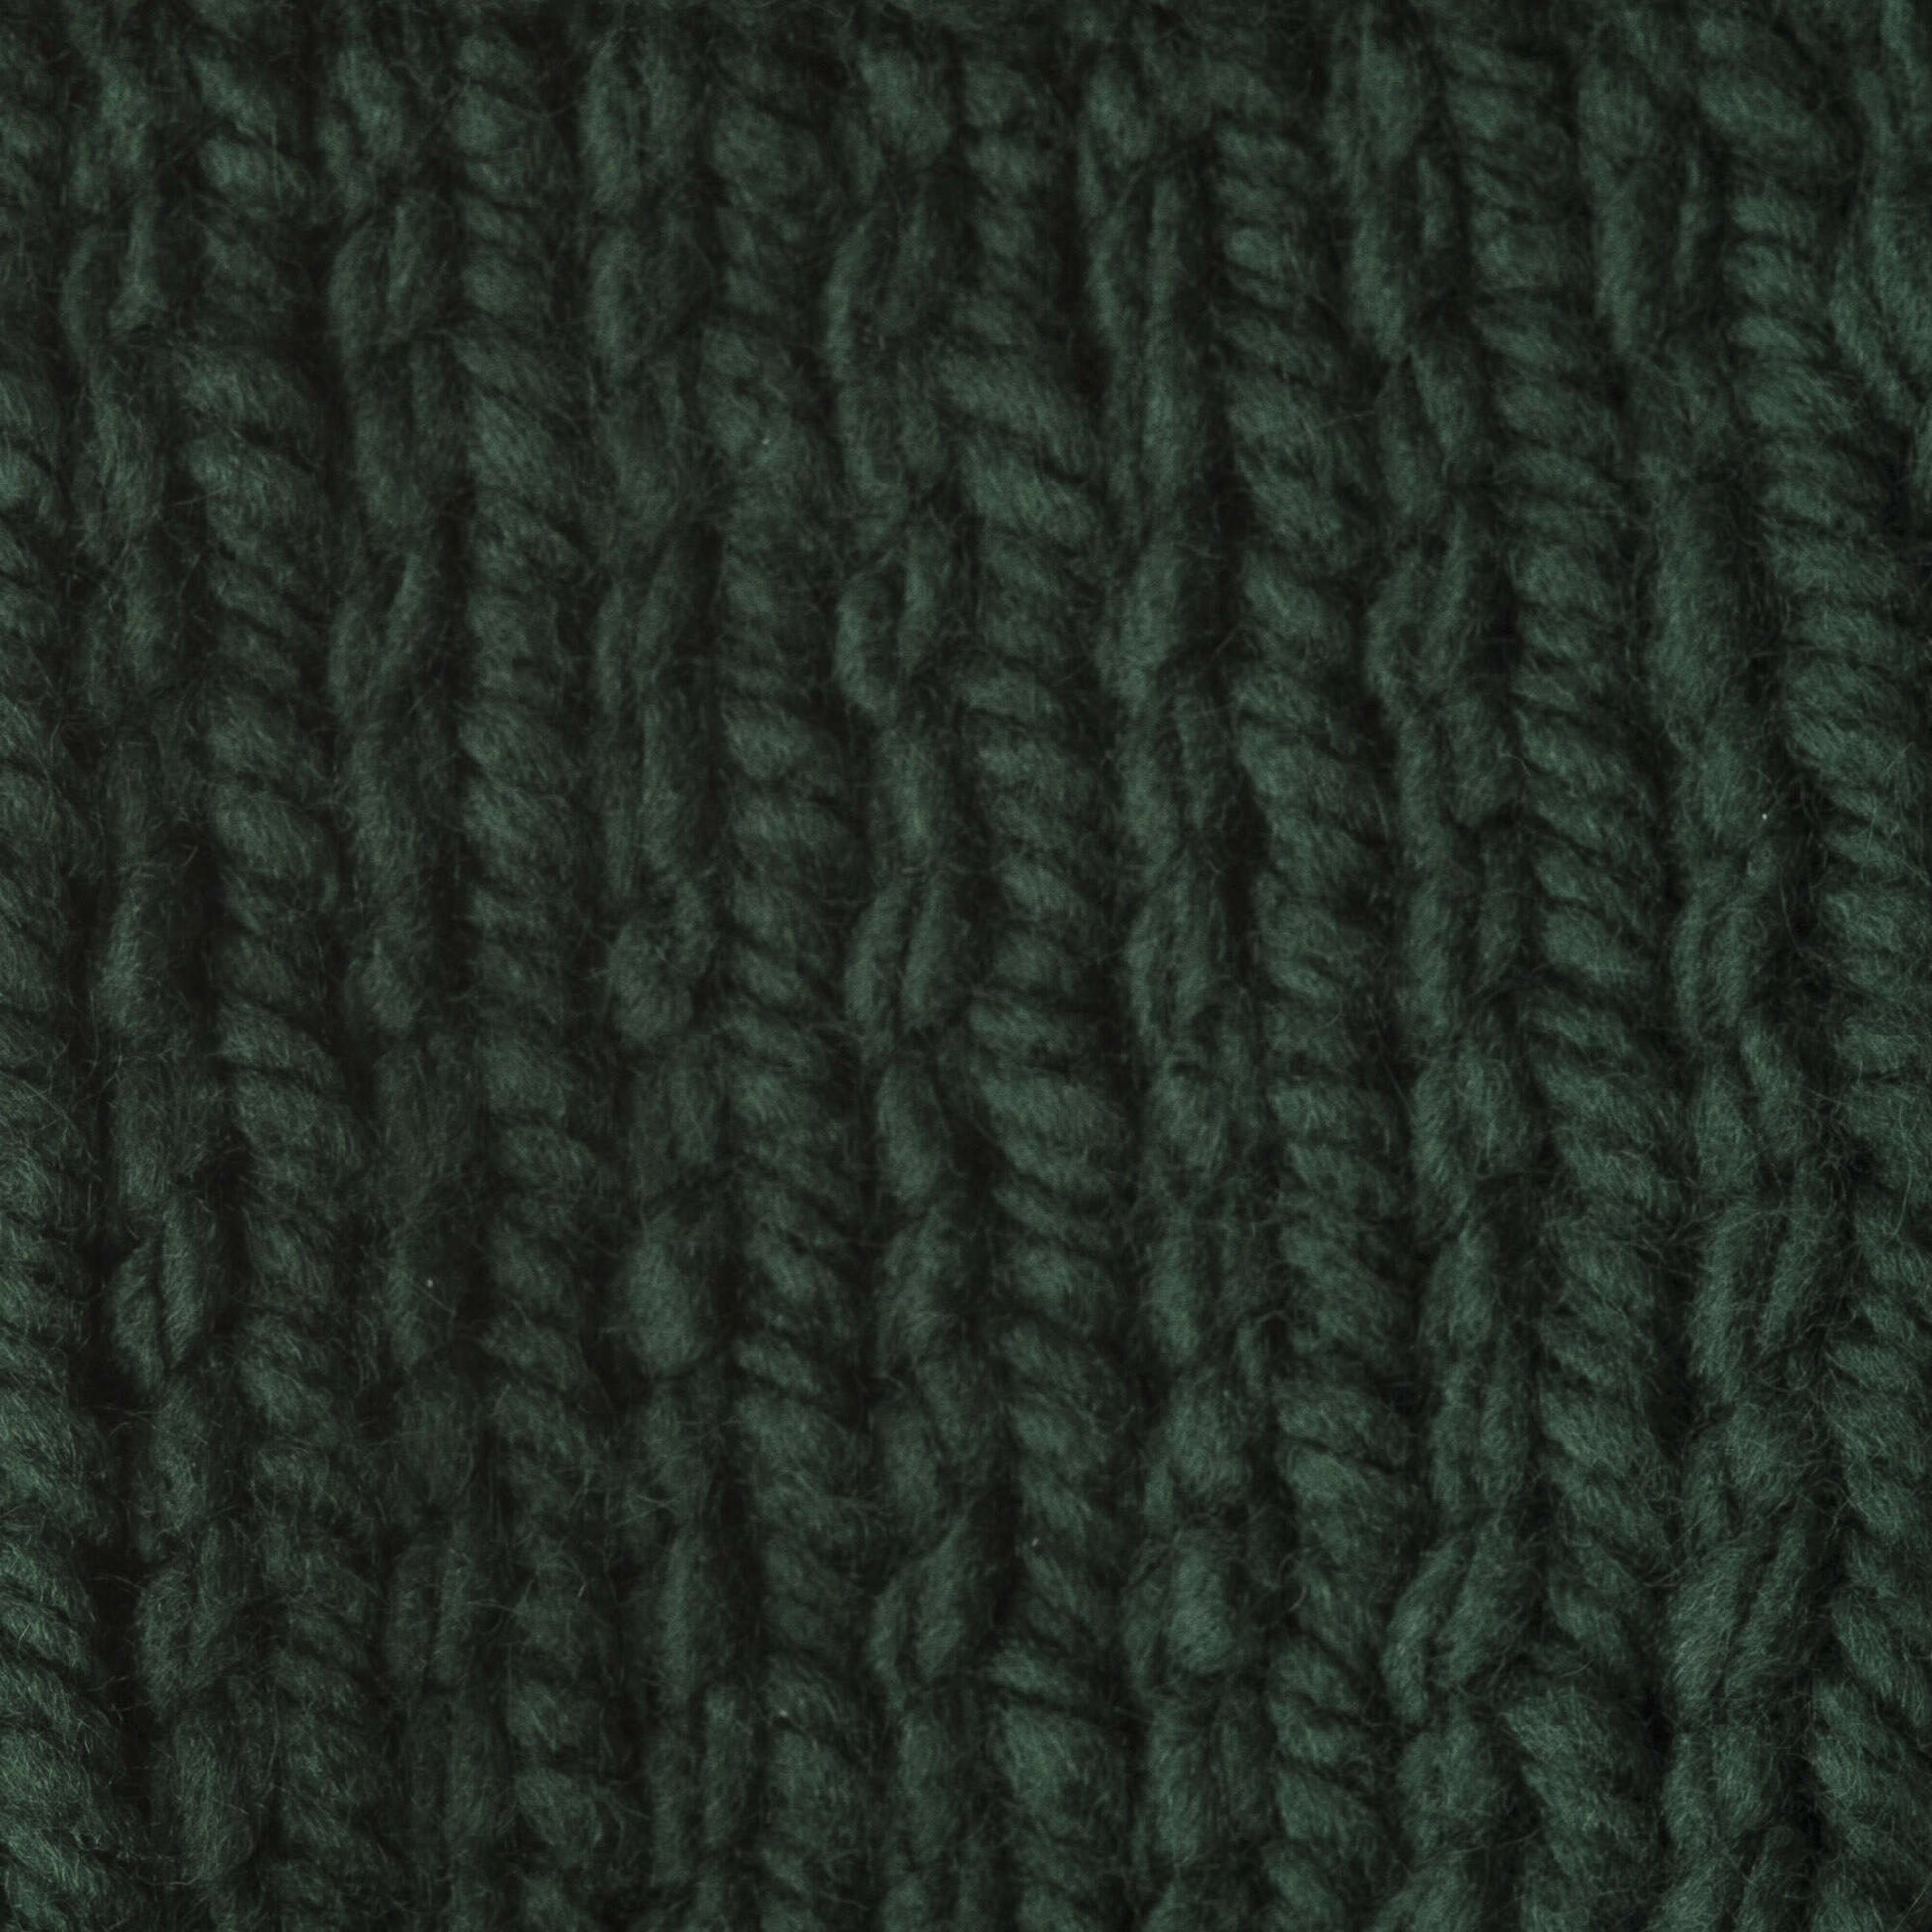 Bernat Softee Chunky Yarn (100g/3.5oz) Dark Green